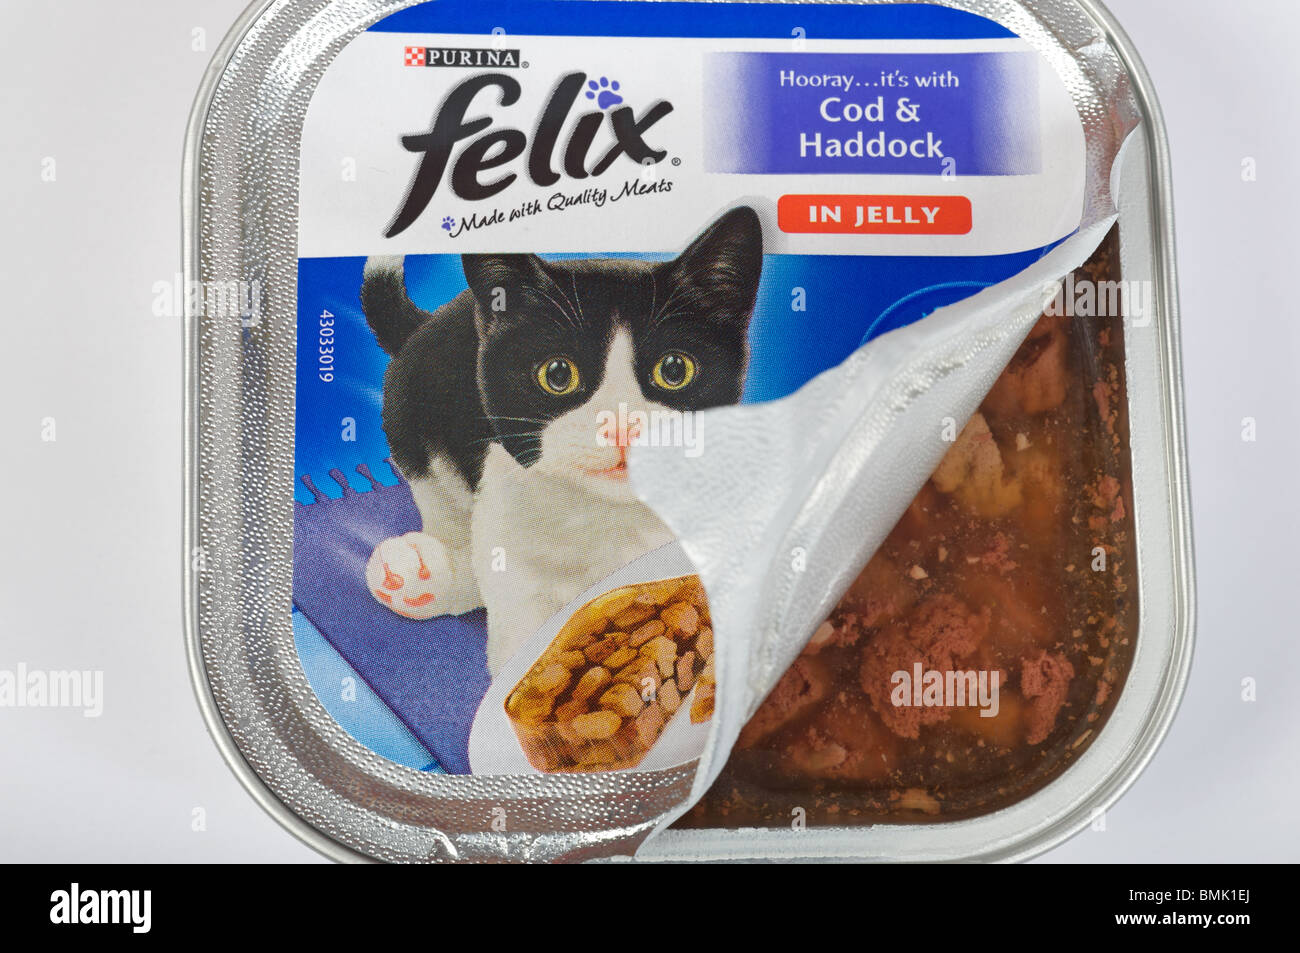 Felix cod and haddock cat food by Purina Stock Photo